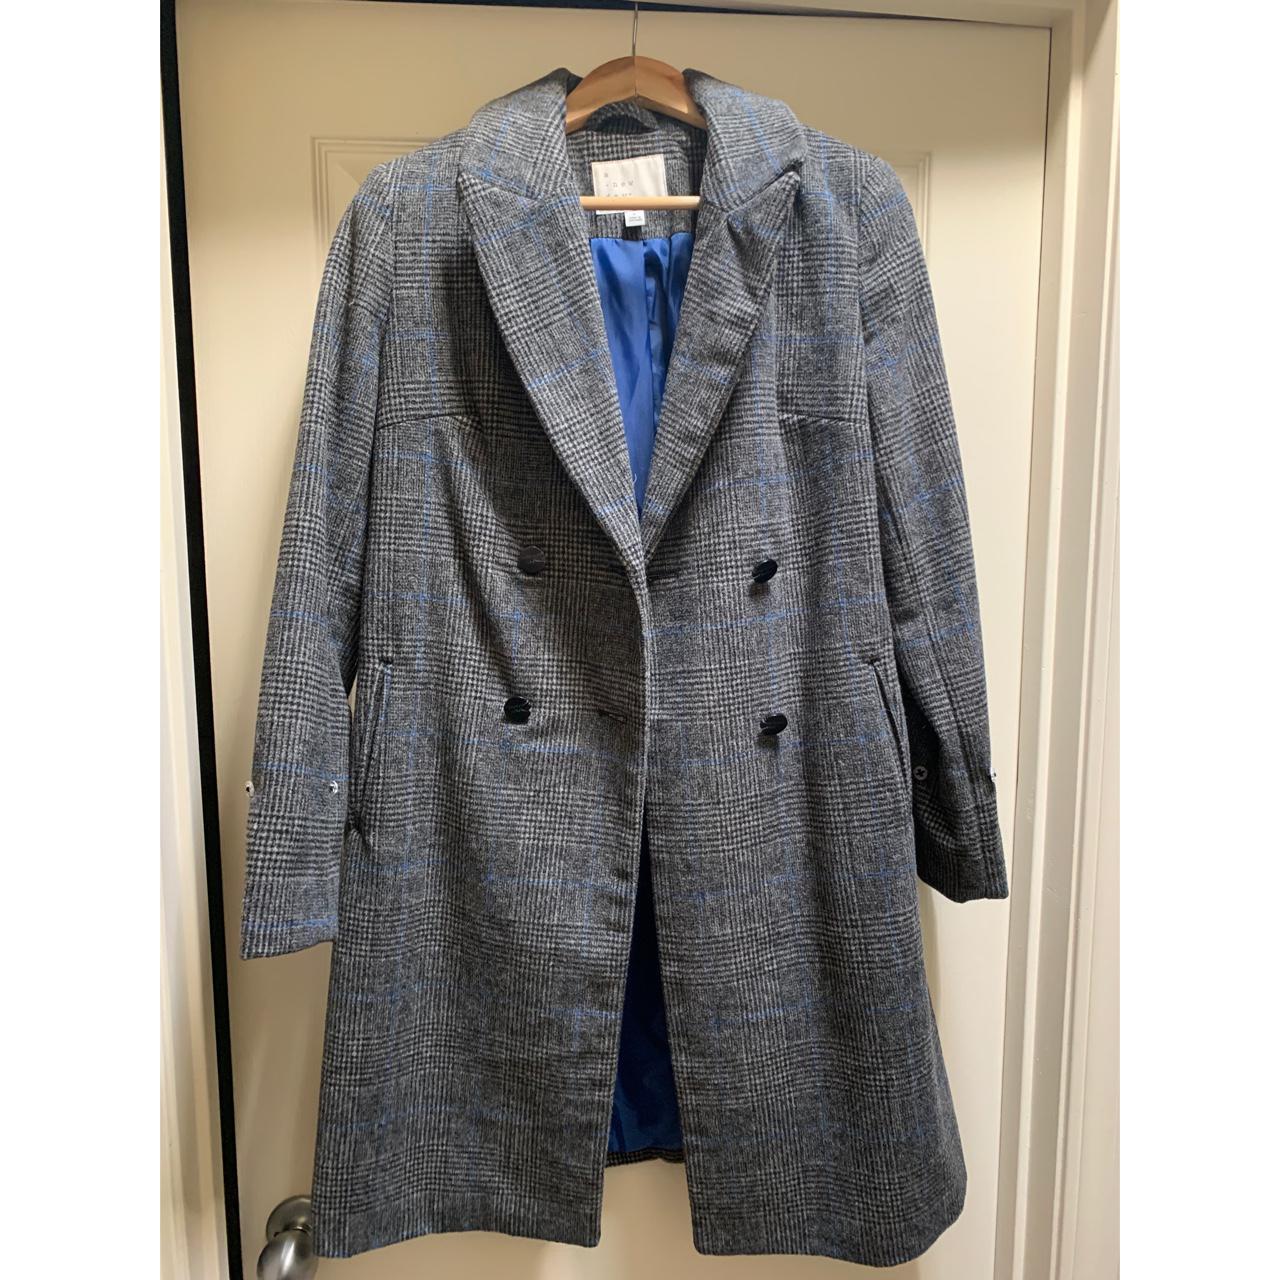 Target Women's Blue and Grey Coat